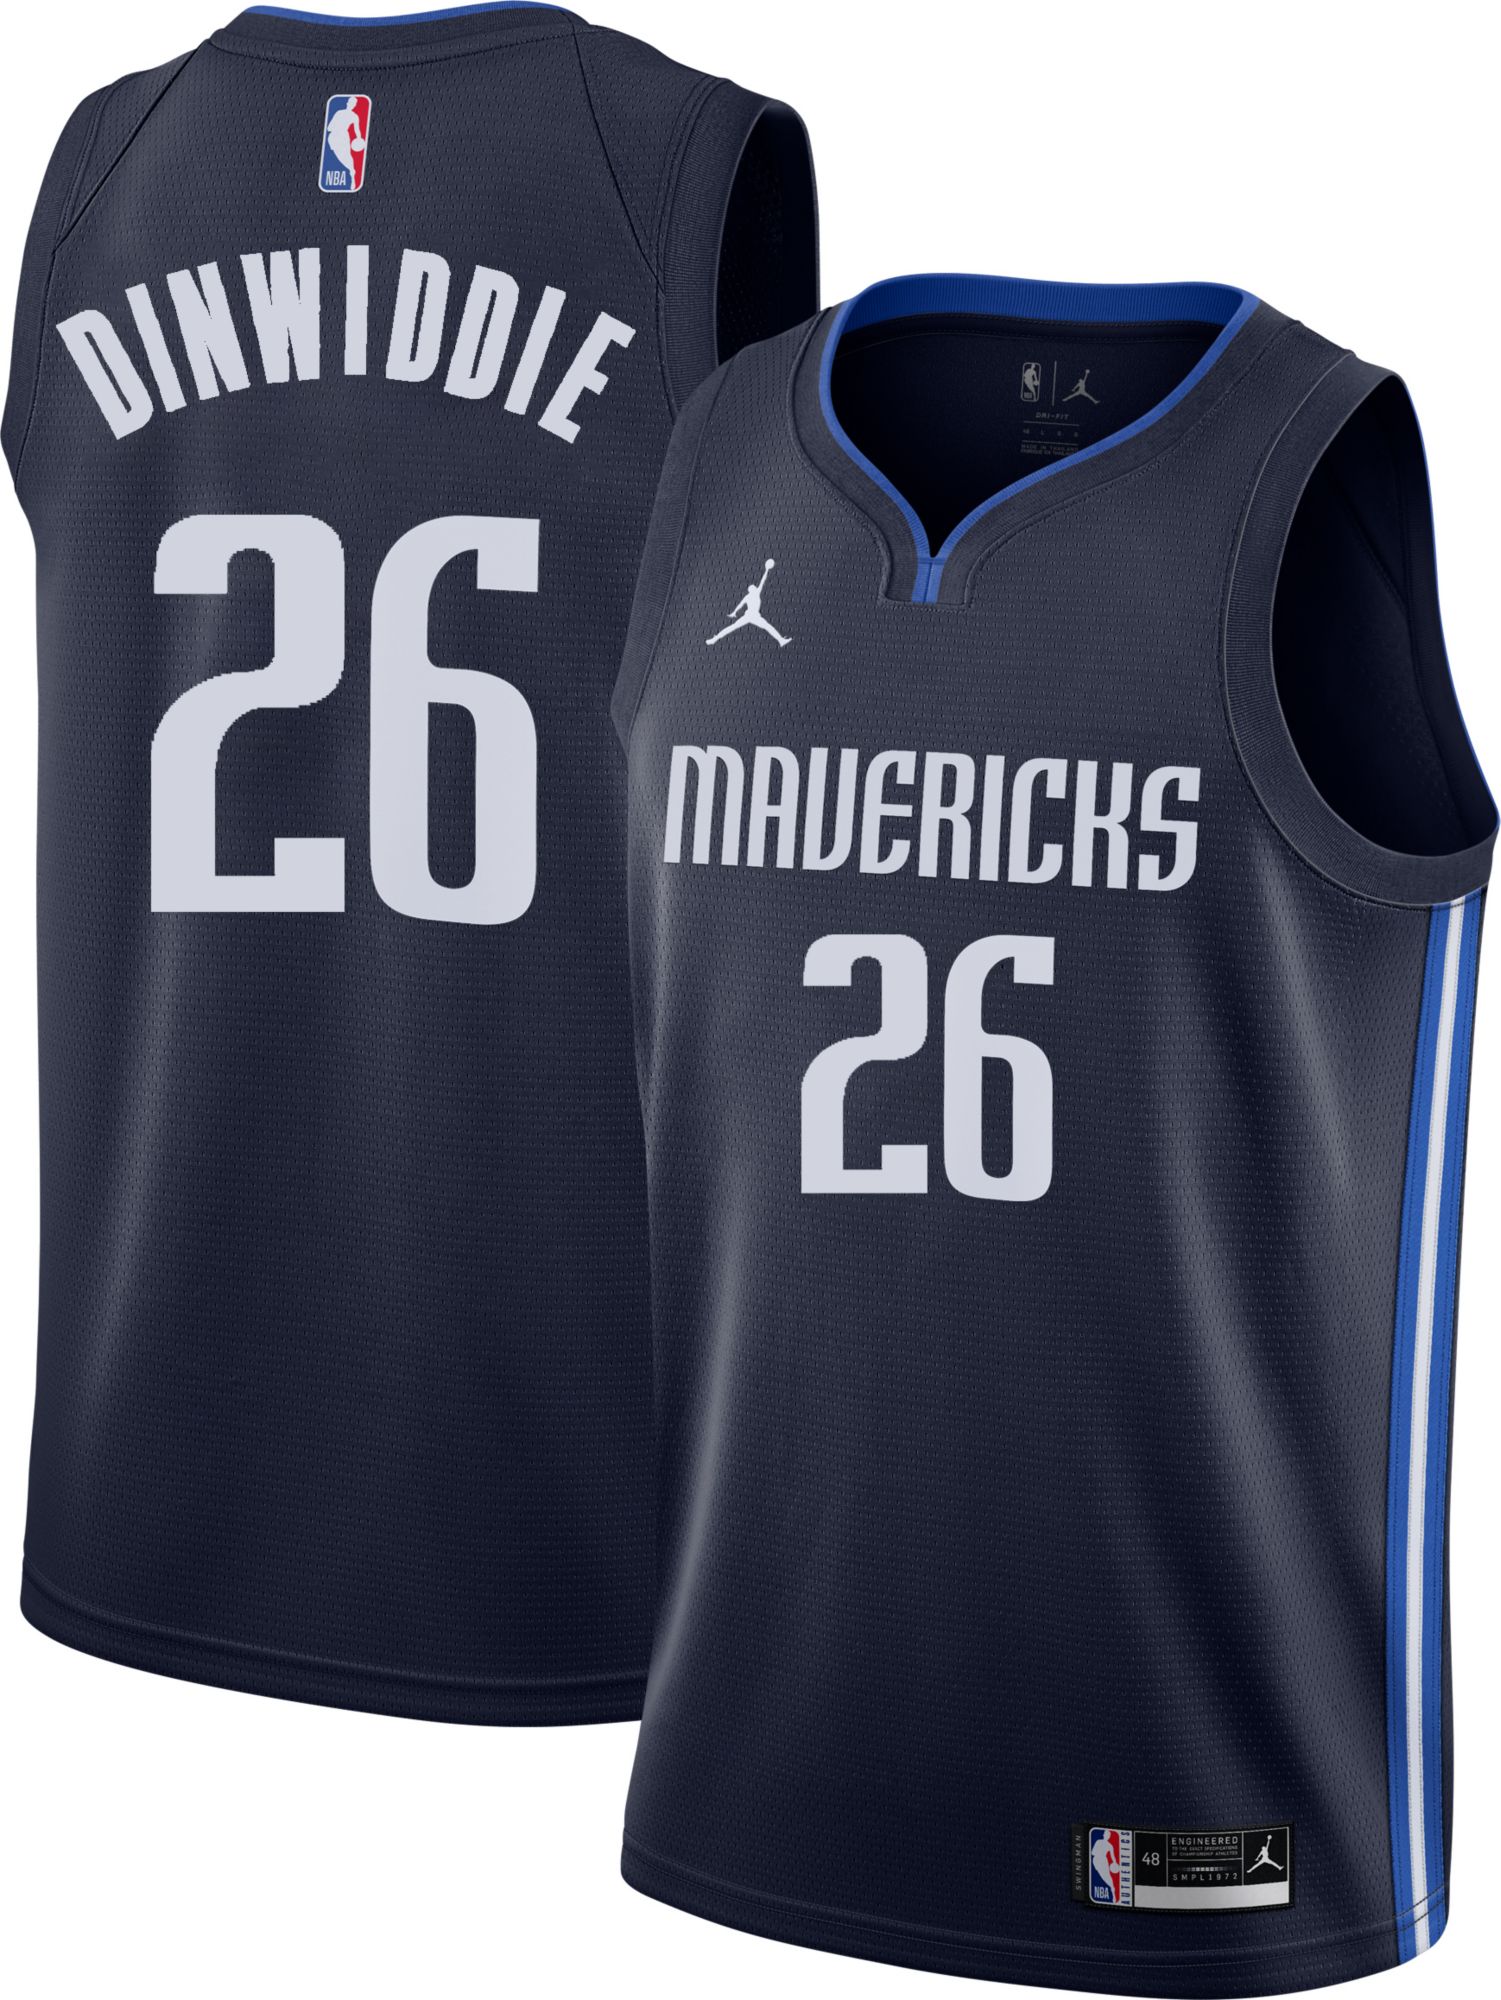 Men's Nike Blue Dallas Mavericks Long Sleeve Shooting Performance Shirt